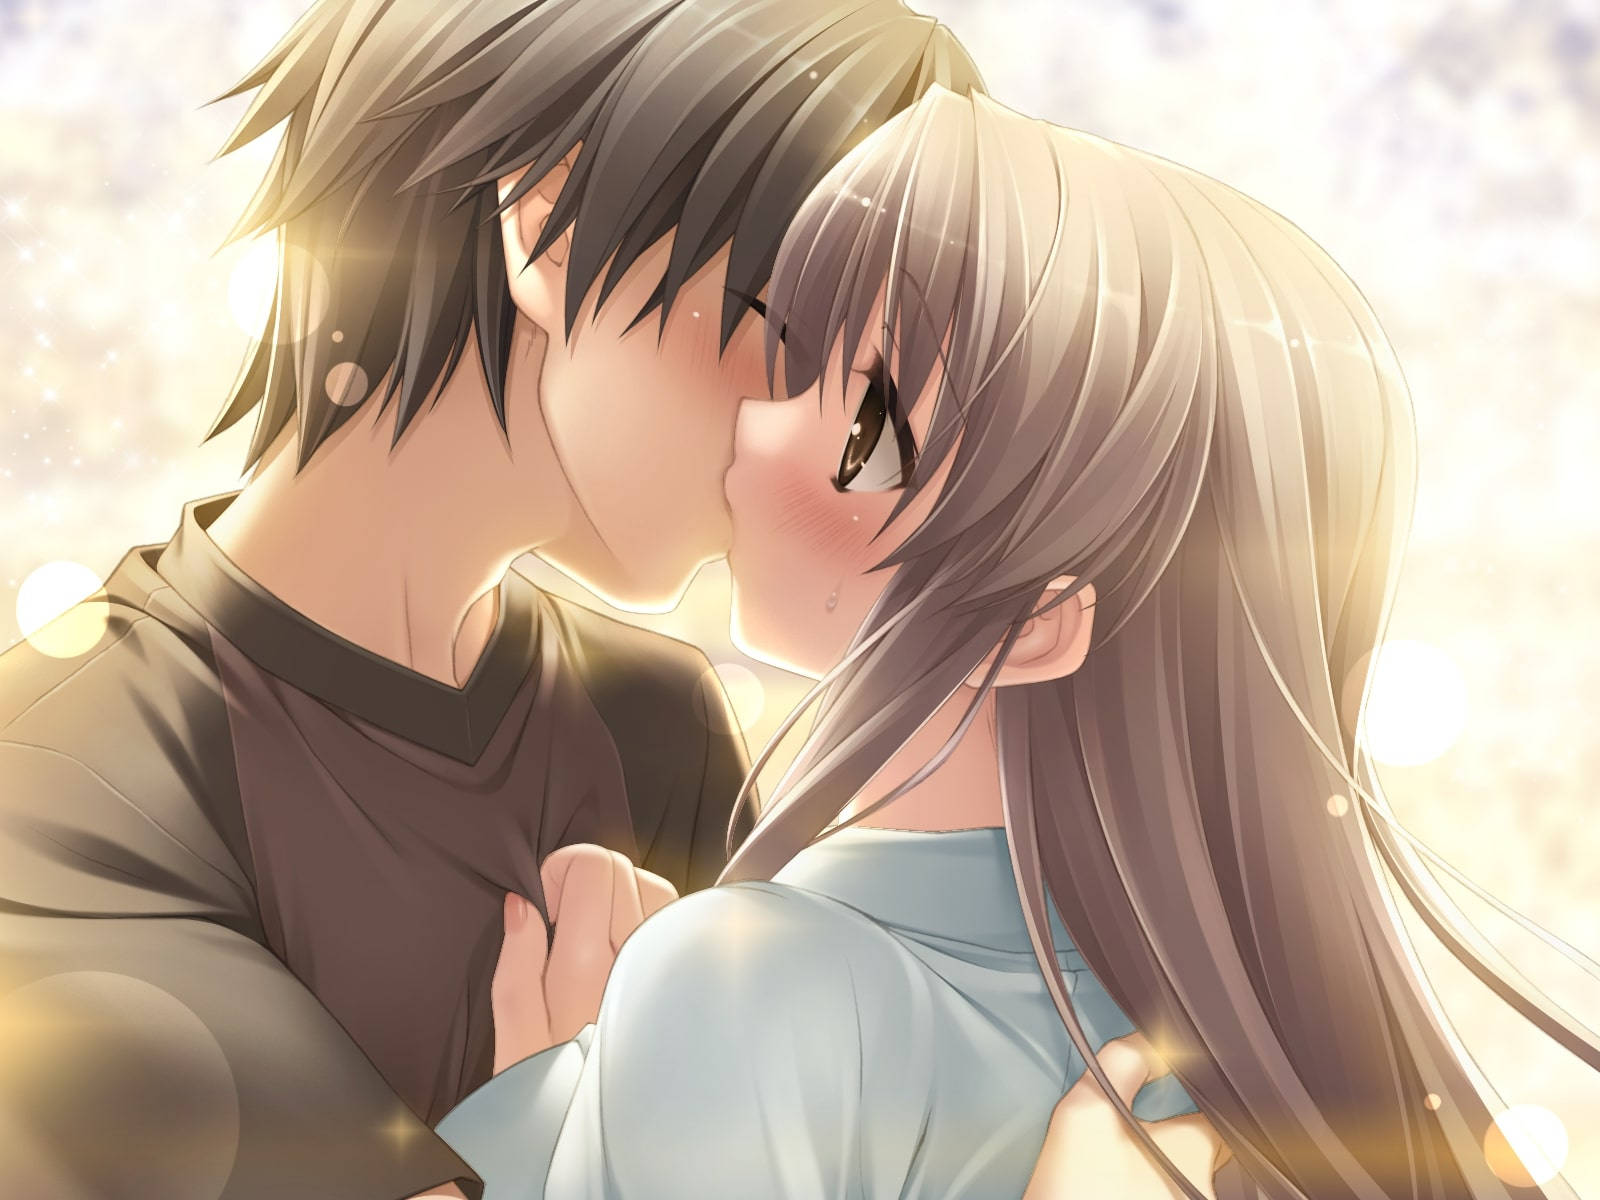 Kiss, cute and anime love couple anime #1106868 on animesher.com